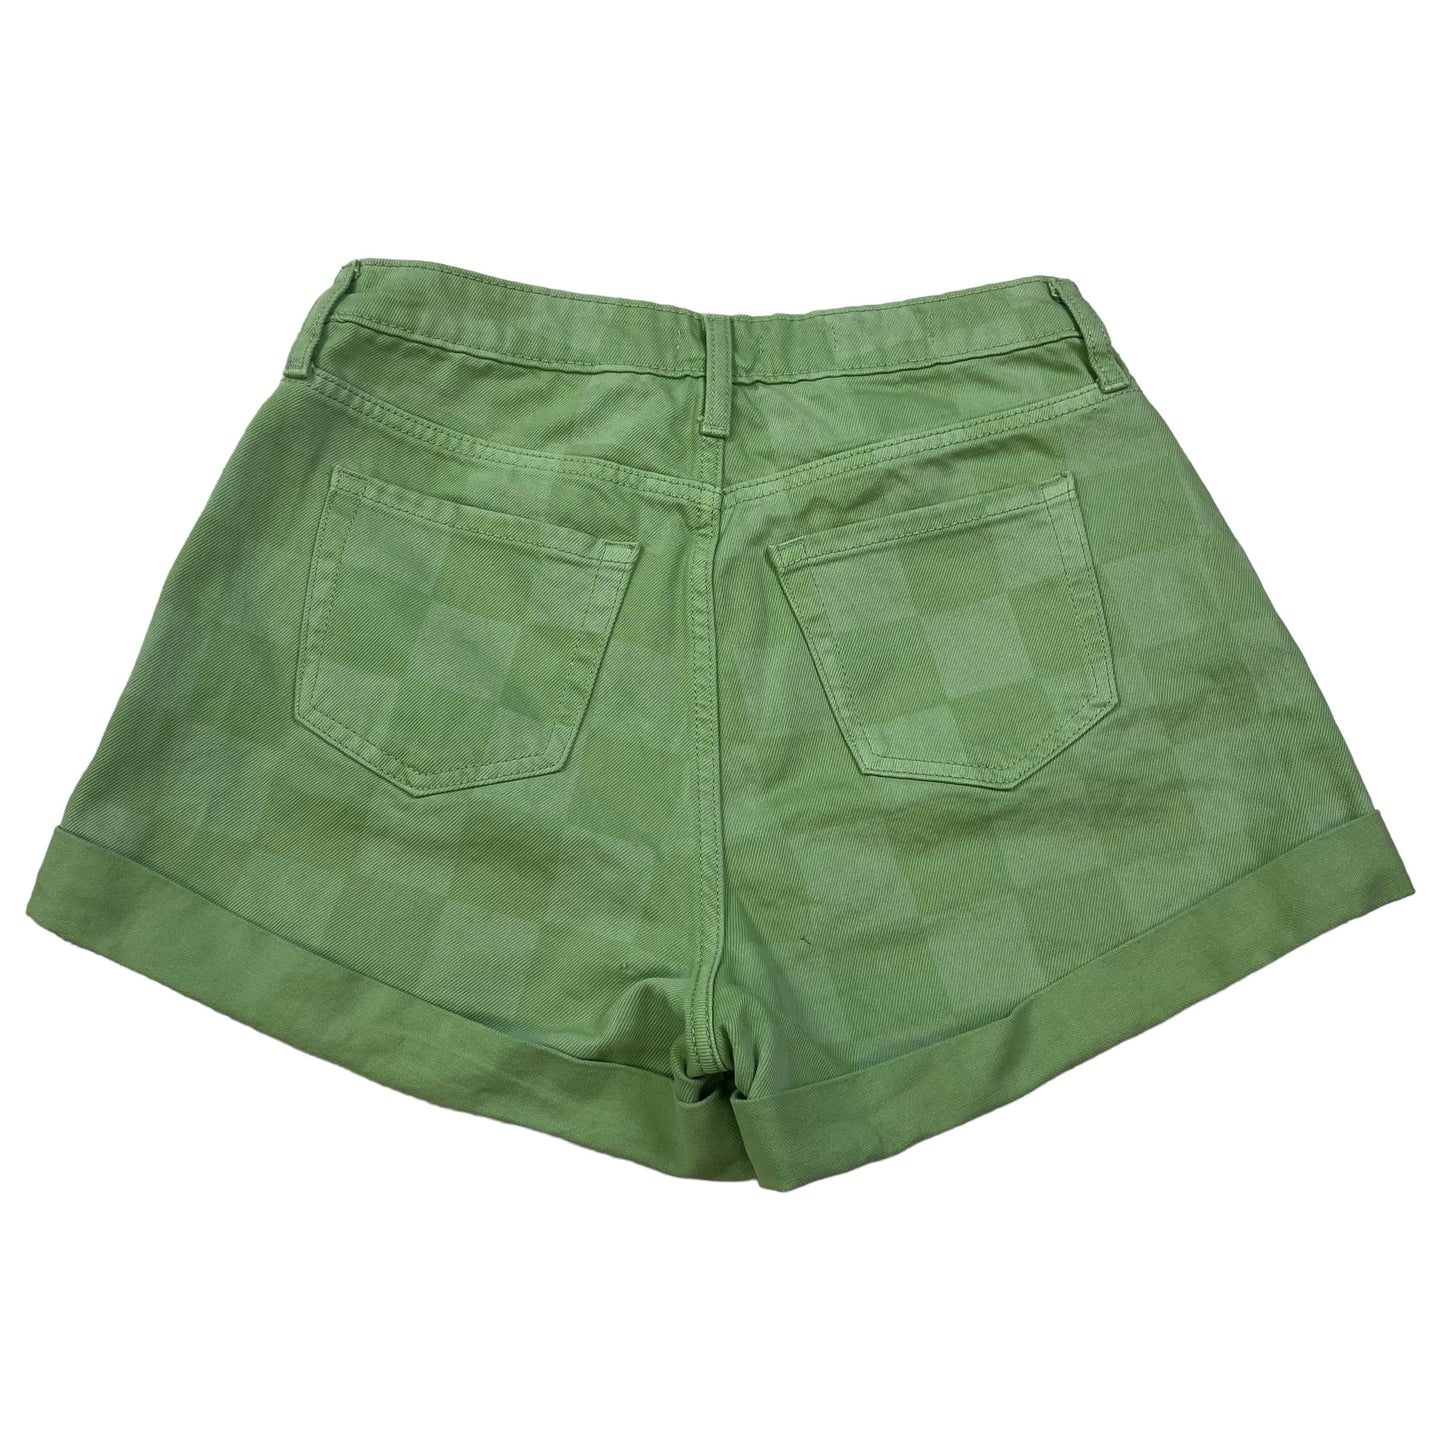 Green Denim Shorts Wild Fable, Size 6